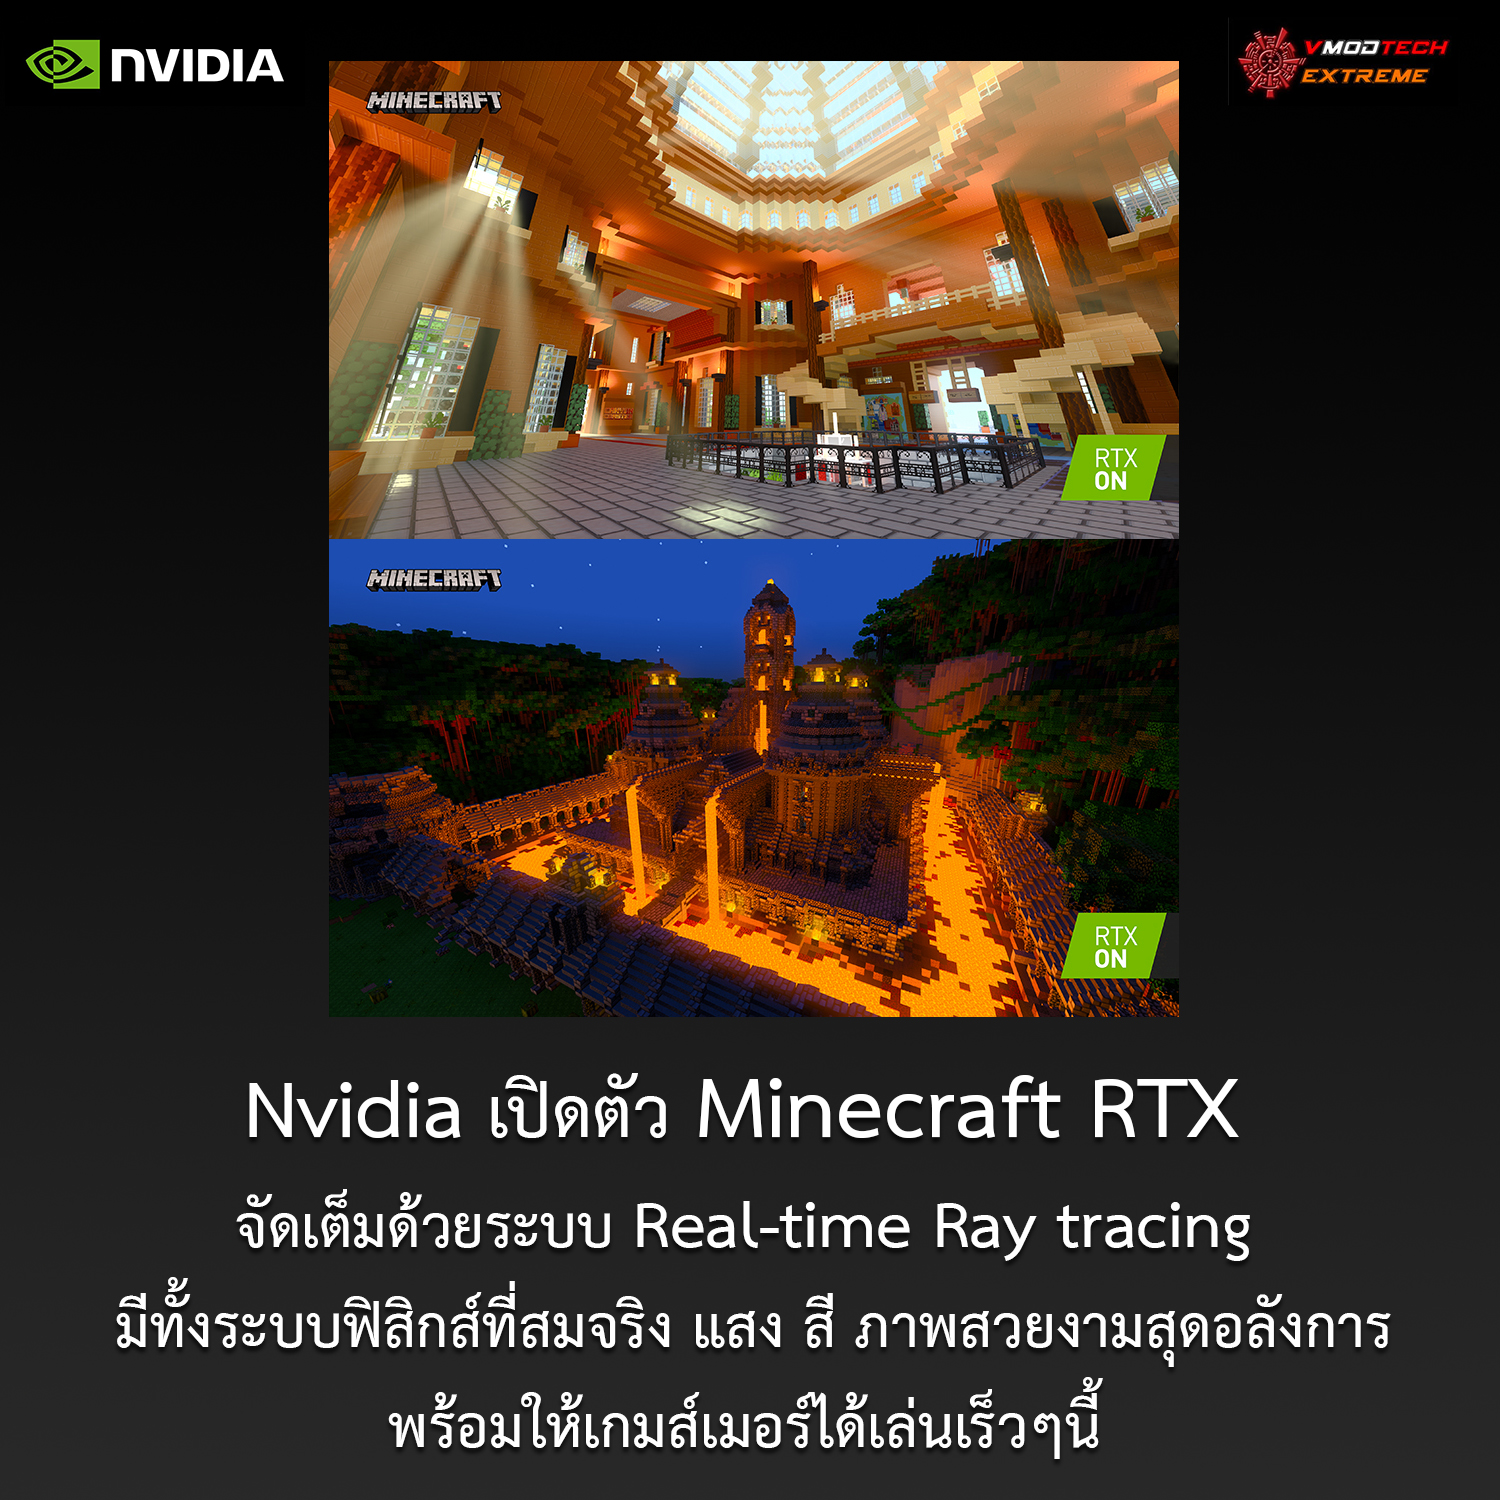 Nvidia เปิดตัว Minecraft RTX จัดเต็มด้วยระบบ Real-time Ray tracing มีทั้งระบบฟิสิกส์ที่สมจริง แสง สี ภาพสวยงามสุดอลังการพร้อมให้เกมส์เมอร์ได้เล่นเร็วๆนี้ 